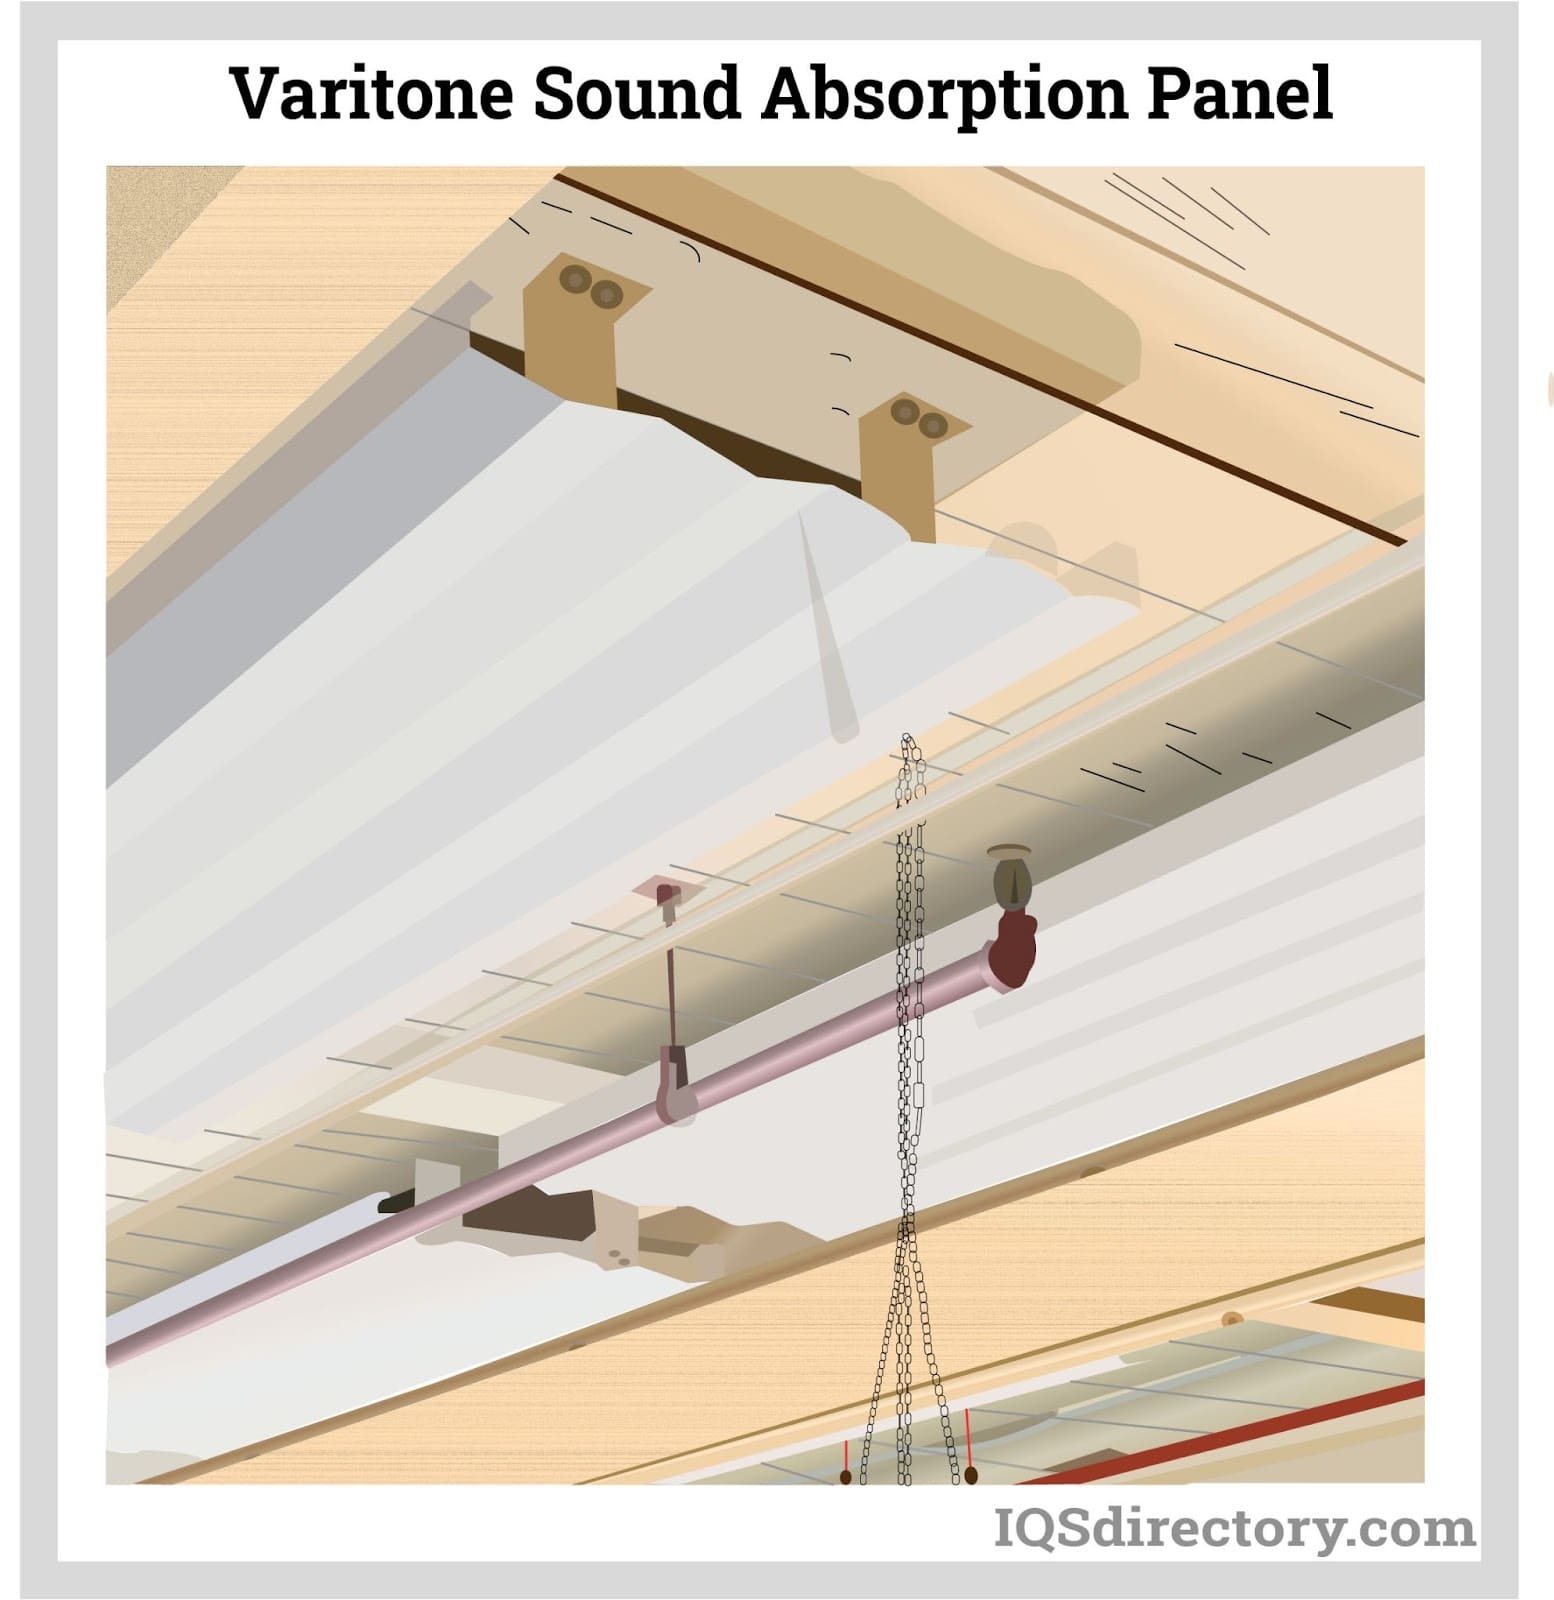 Varitone Sound Absorption Panel